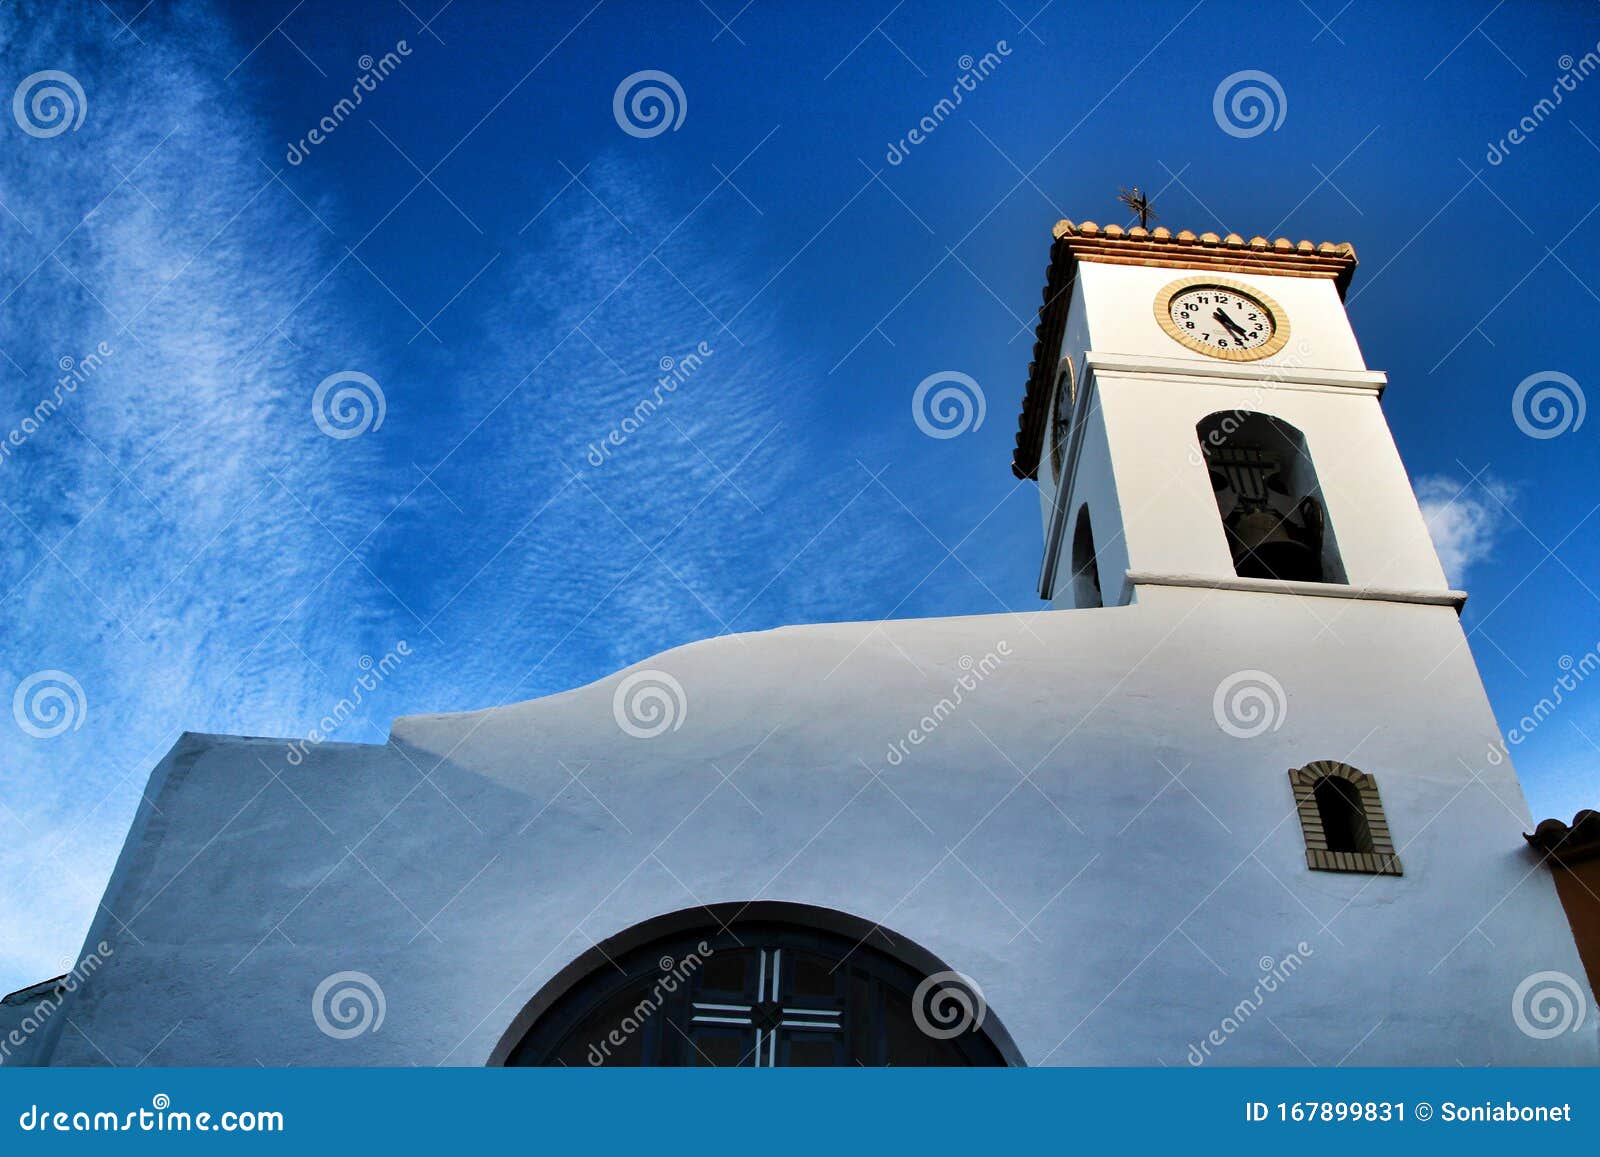 san miguel arcangel church in carricola